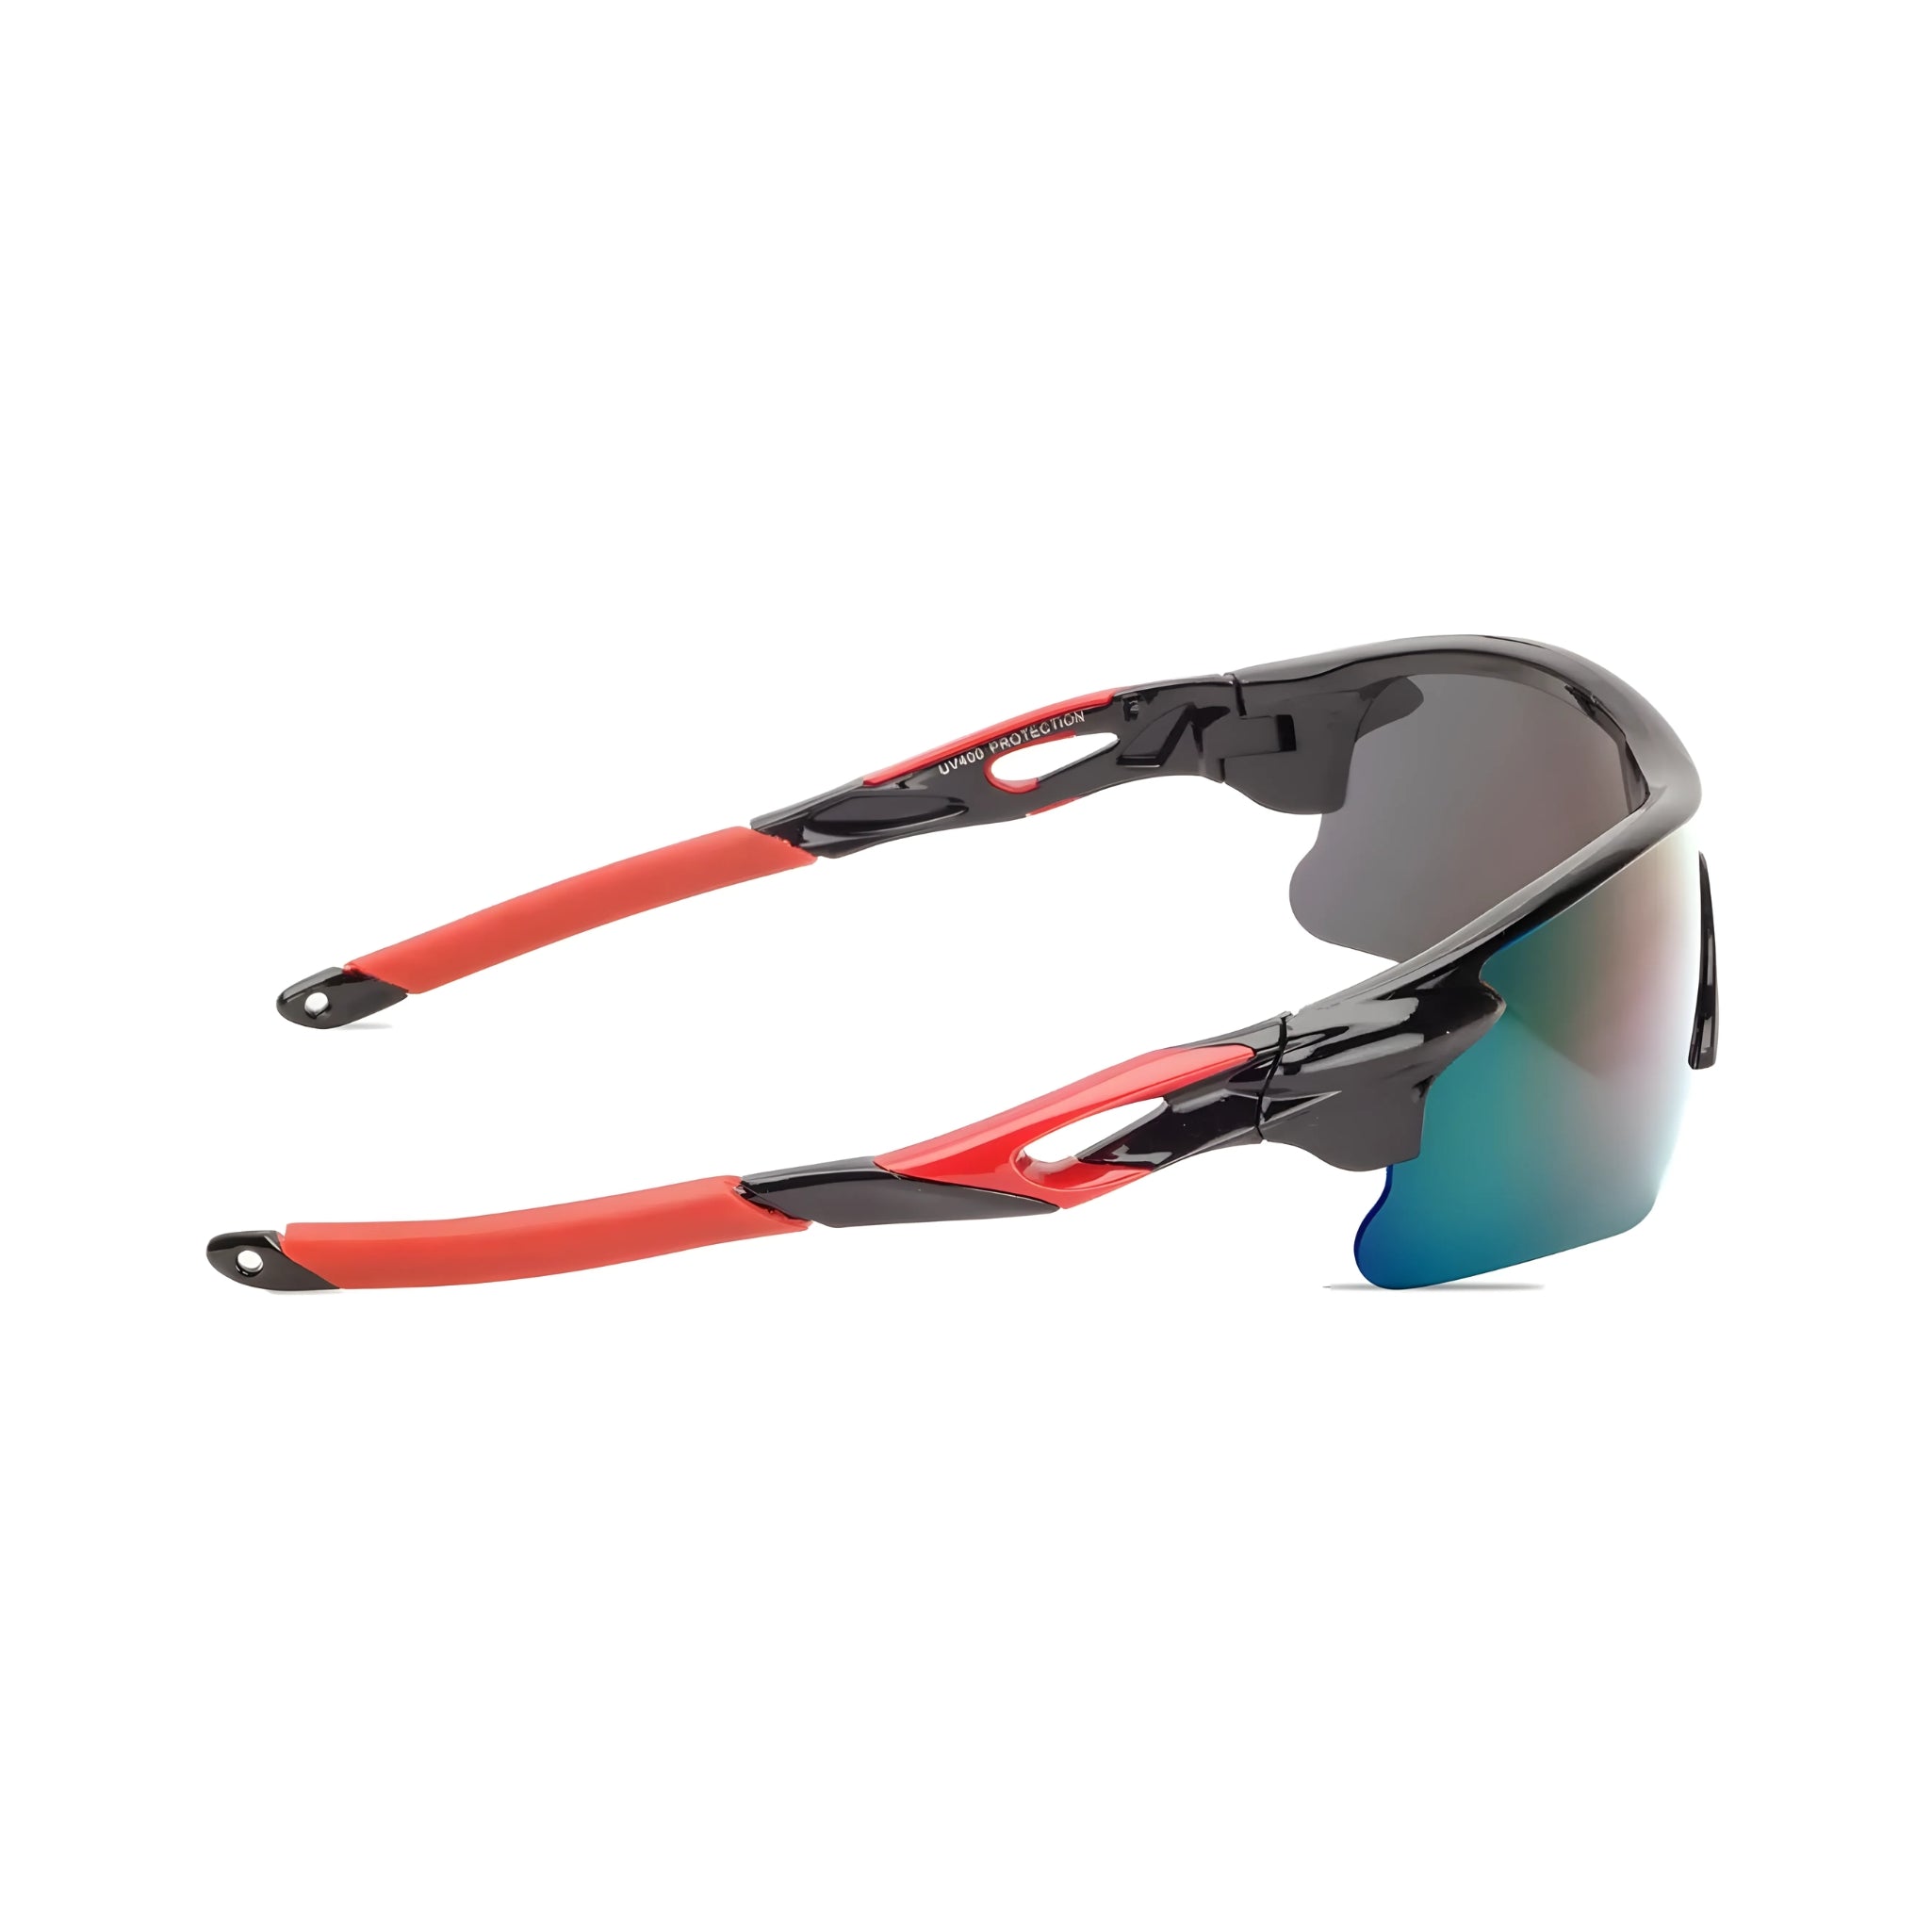 Futuristic Series Half Rim Sports Sunglasses - Black Frame Blue Yellow Gradient Lenses